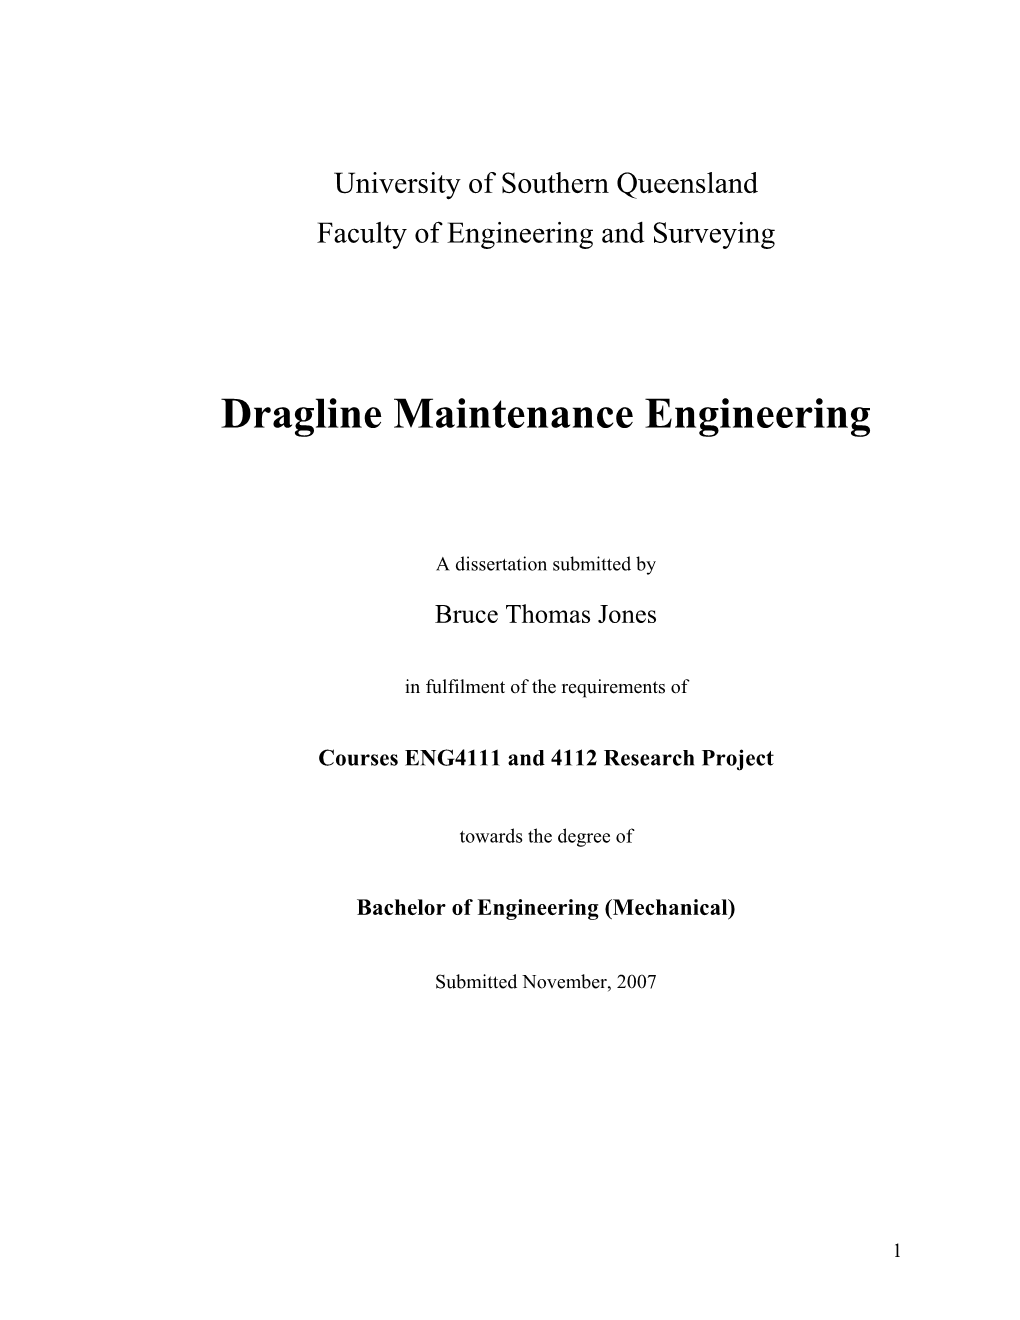 Dragline Maintenance Engineering